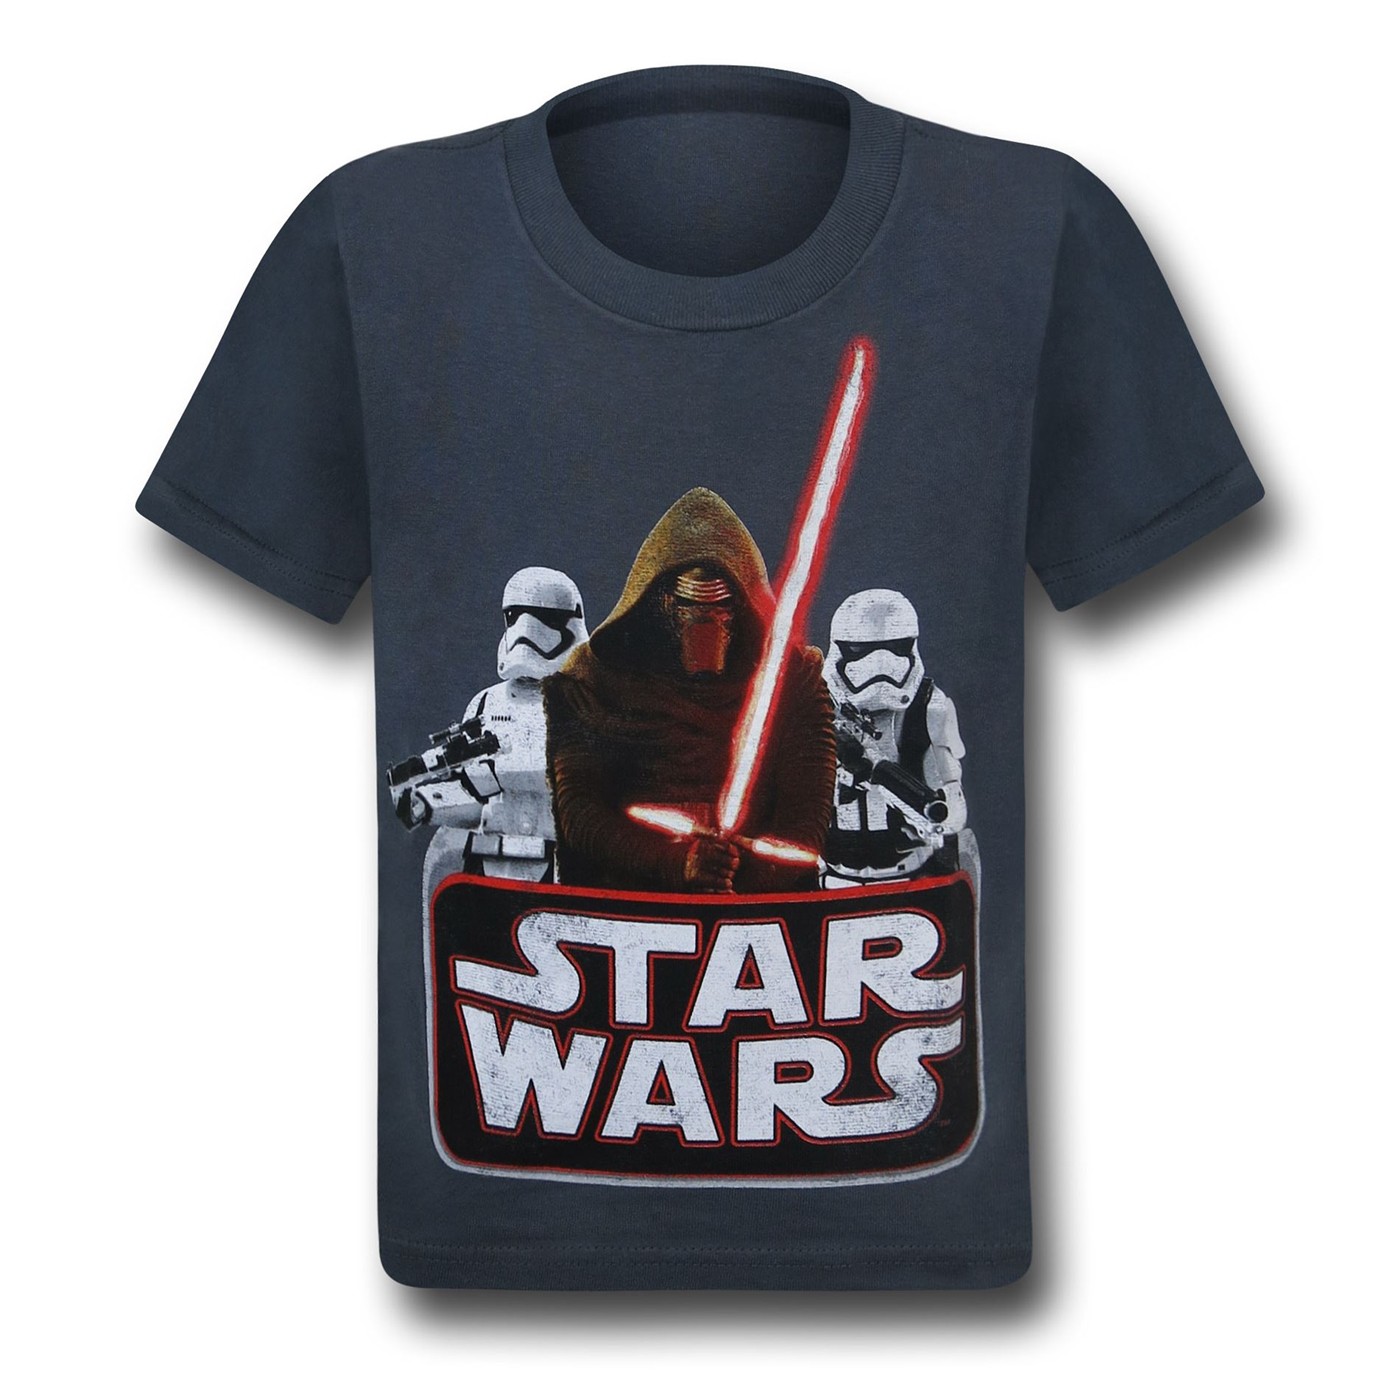 Star Wars Force Awakens Bad Bunch Kids T-Shirt